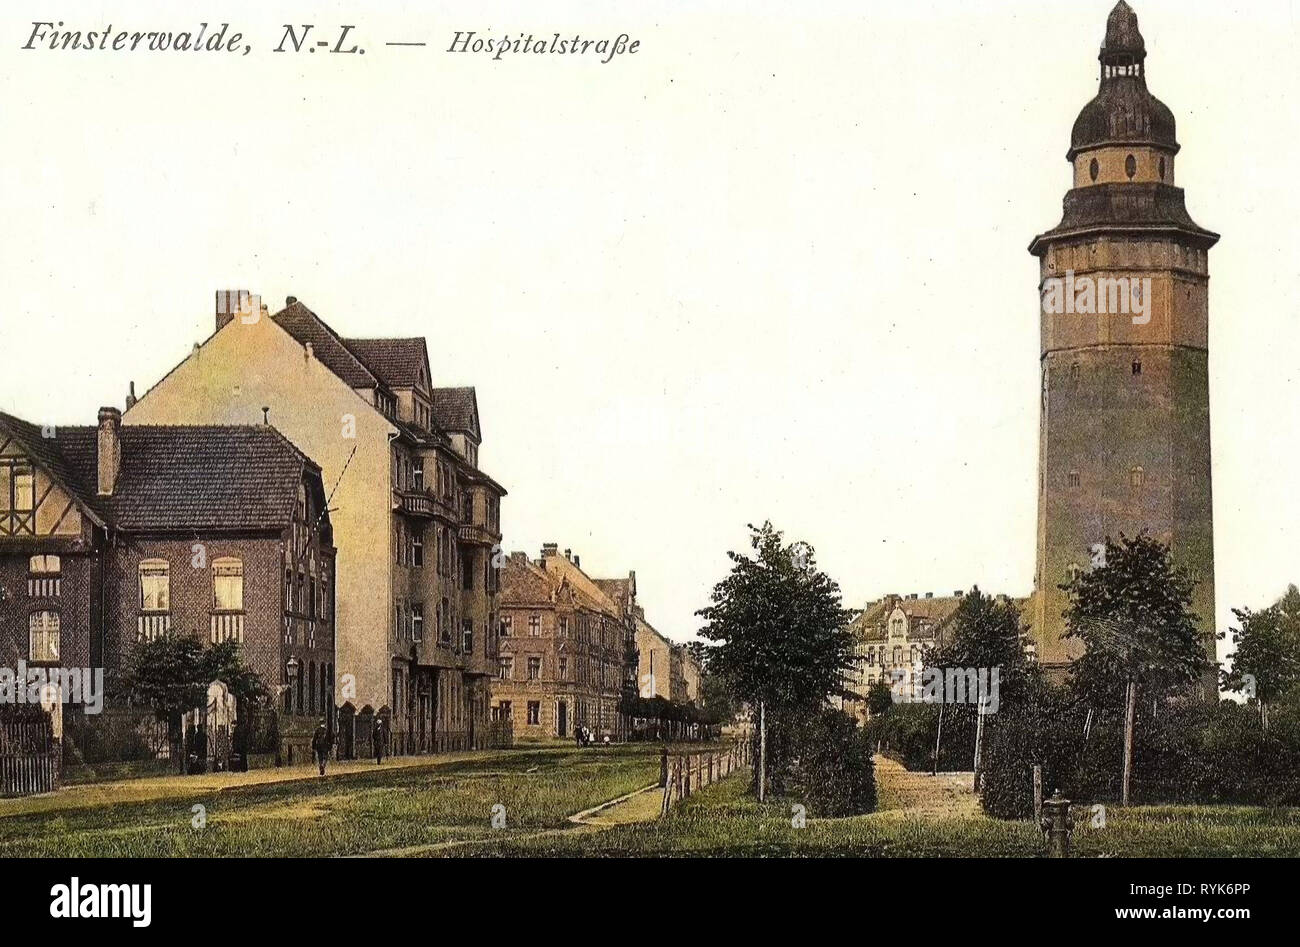 Wasserturm Finsterwalde, Buildings in Finsterwalde, 1918, Brandenburg, Finsterwalde, Hospitalstraße Stock Photo